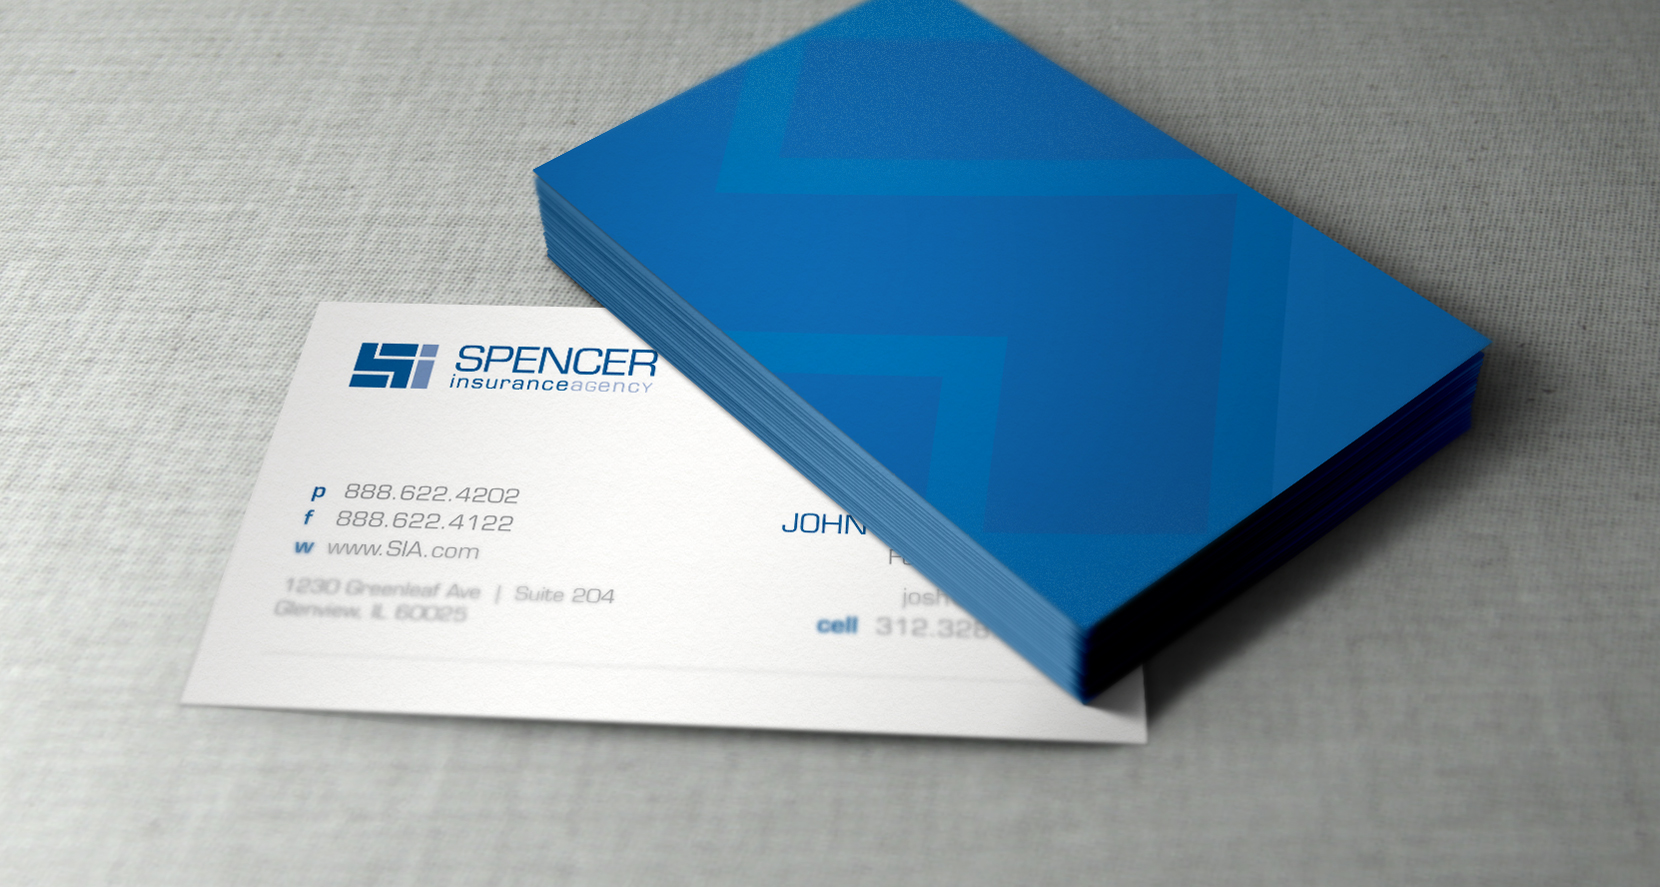 Spencer Insurance Agency Branding Identity Stationary Piece